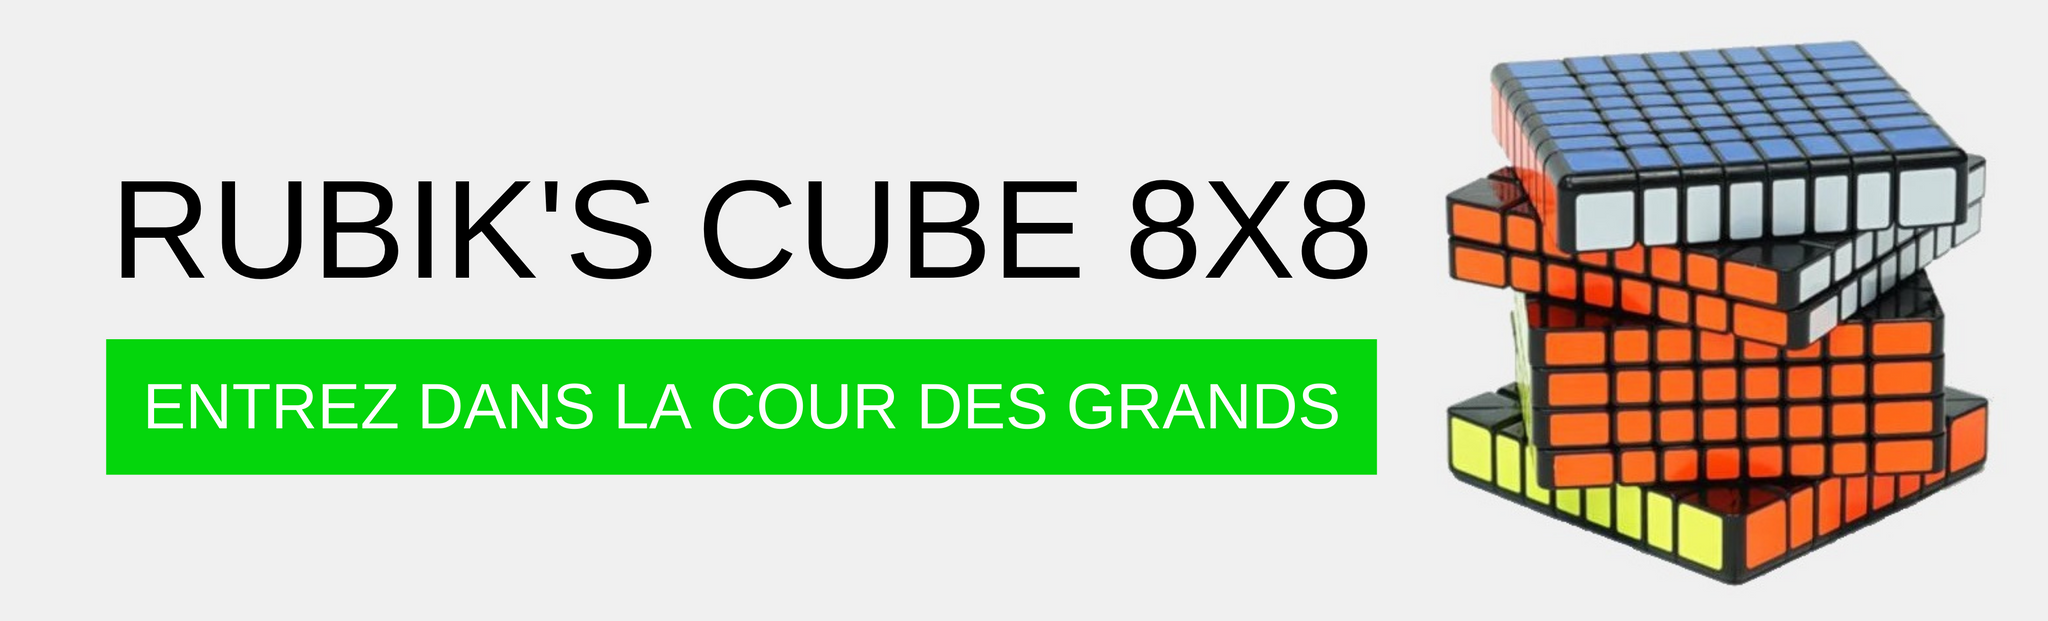 rubik's cube 8x8x8